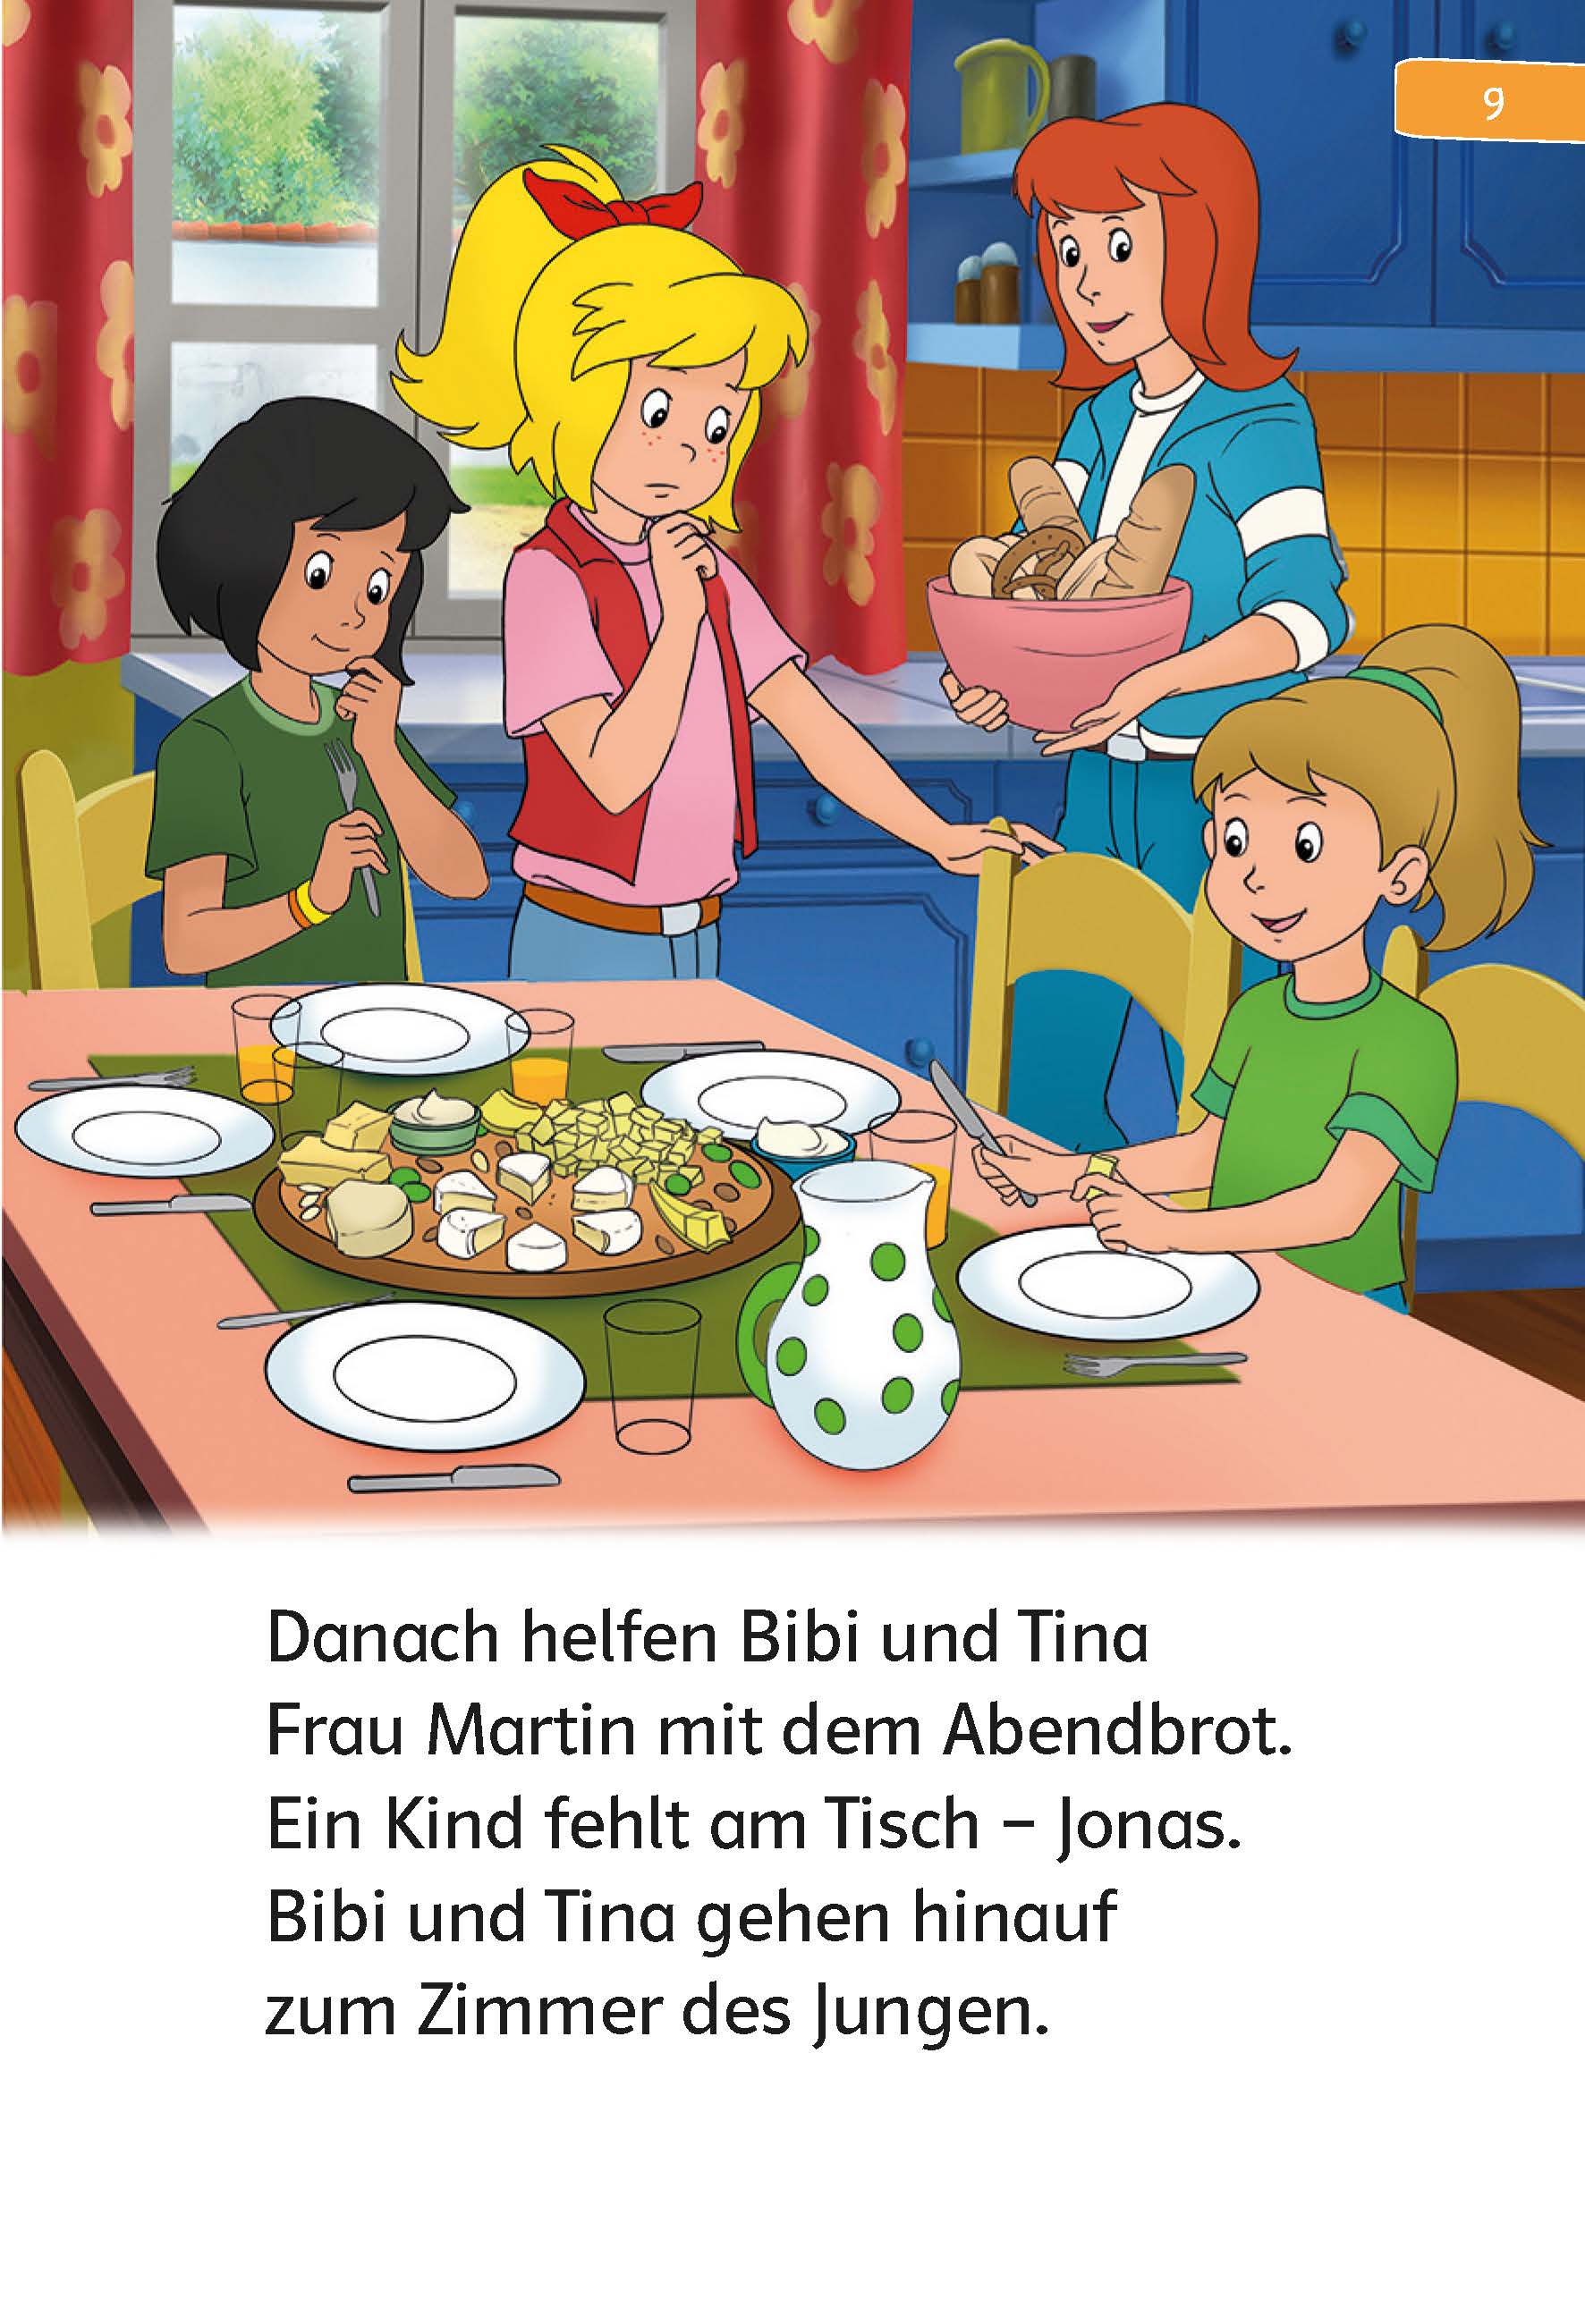 Bibi & Tina: Die 6 besten Freundinnen-Geschichten